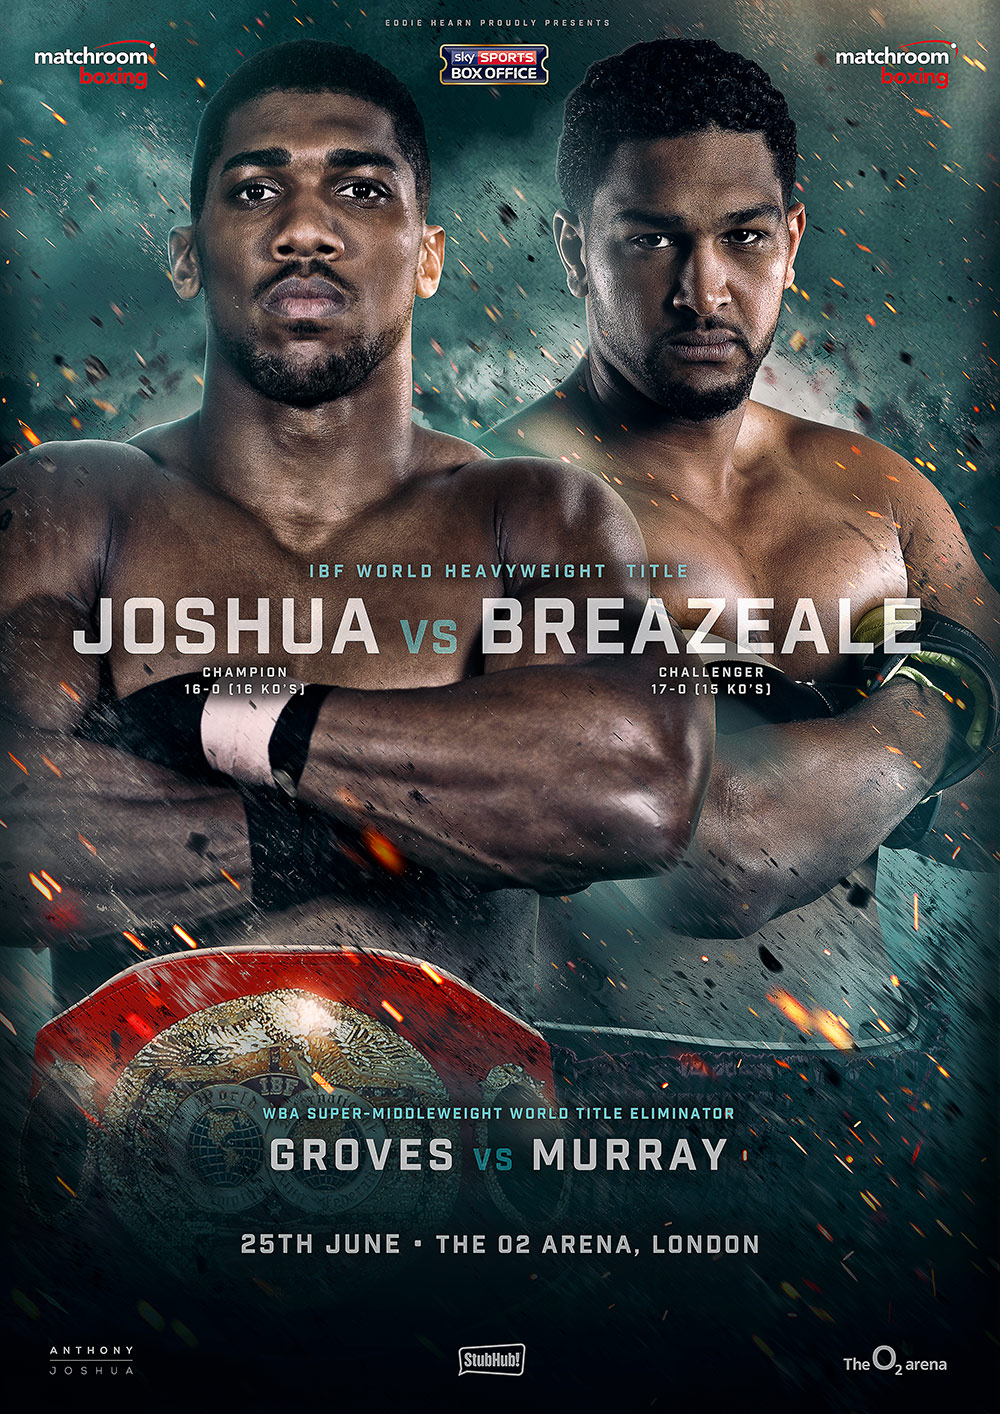 anthony joshua vs dominic breazeale IBF championship title fightboxing poster design